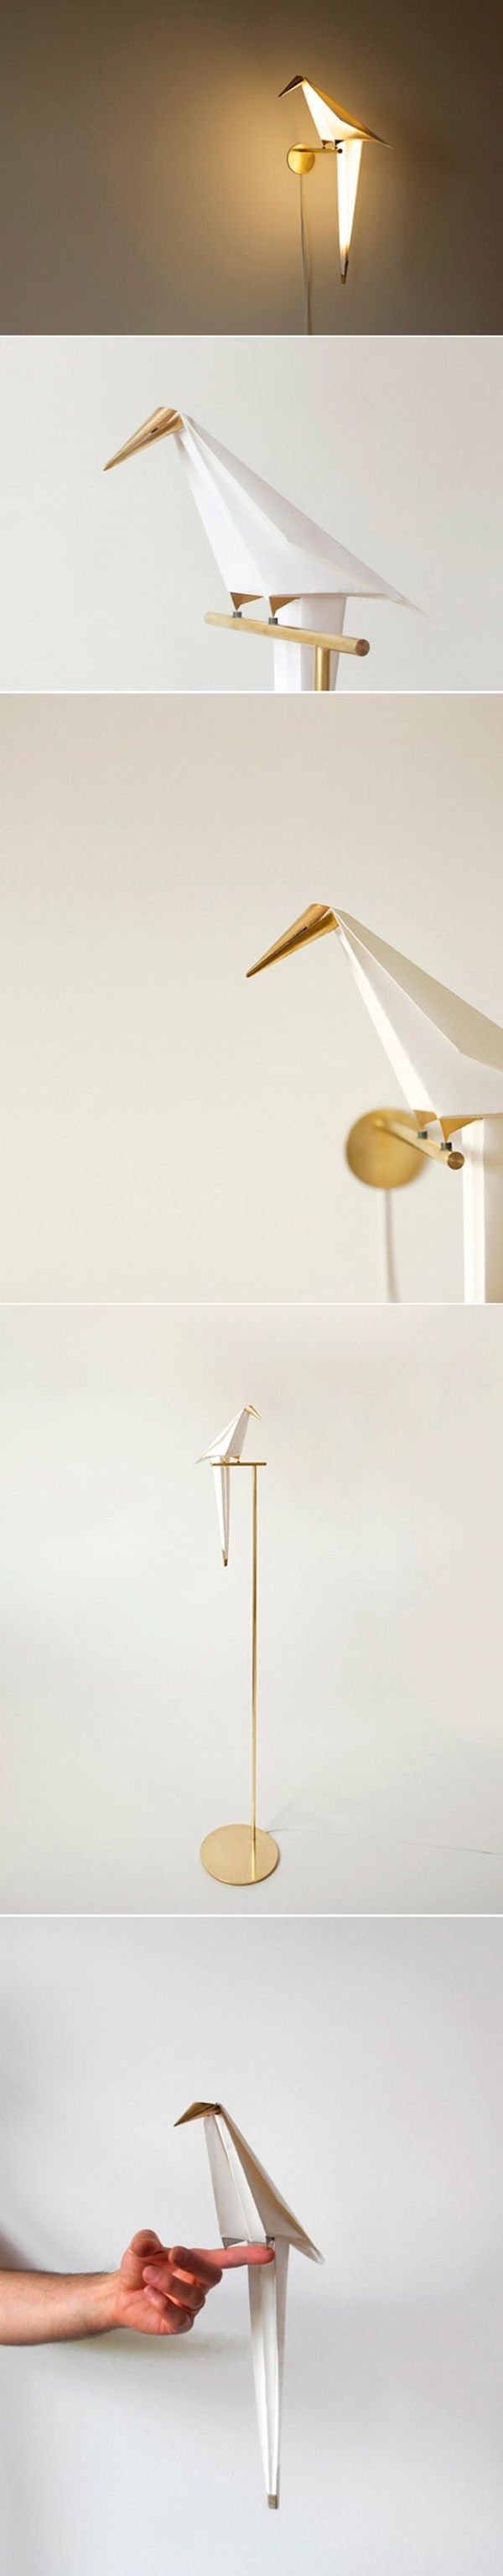 DIY Indoor Decoration Ideas For Bird Lover